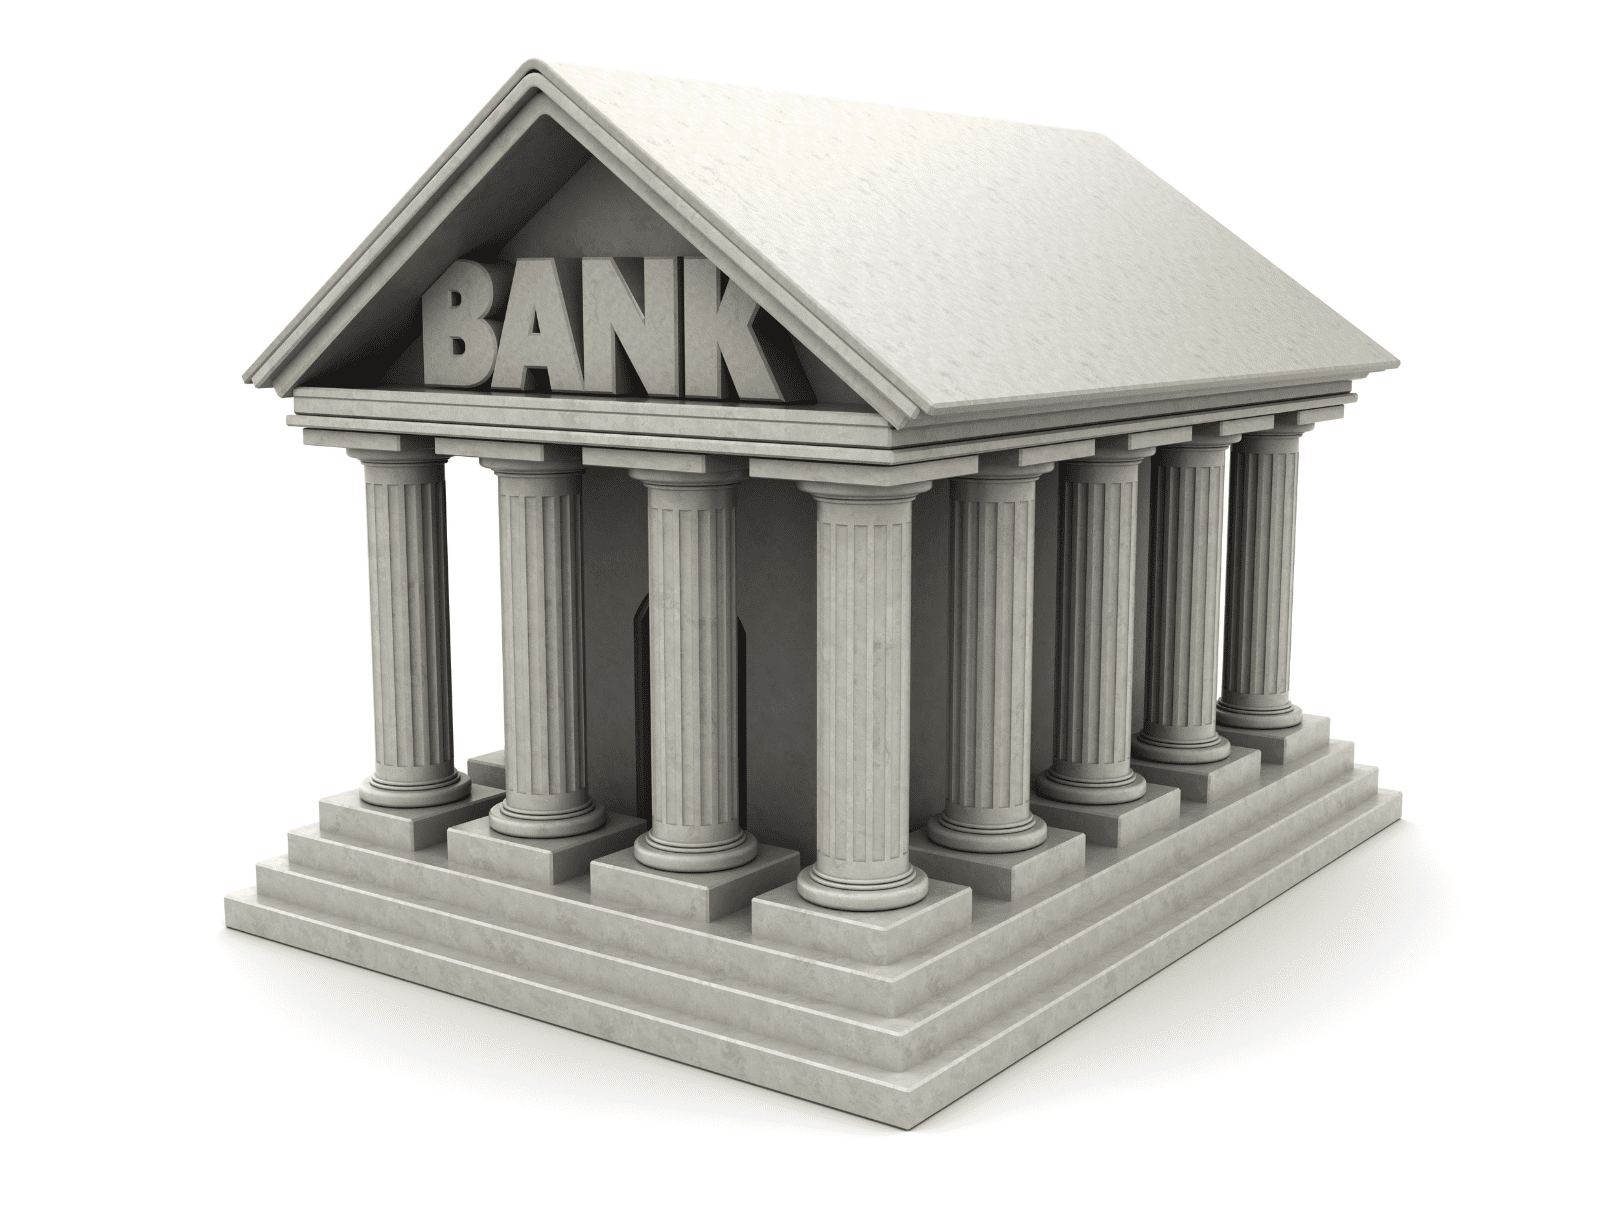 A solid gray representation of a bank building